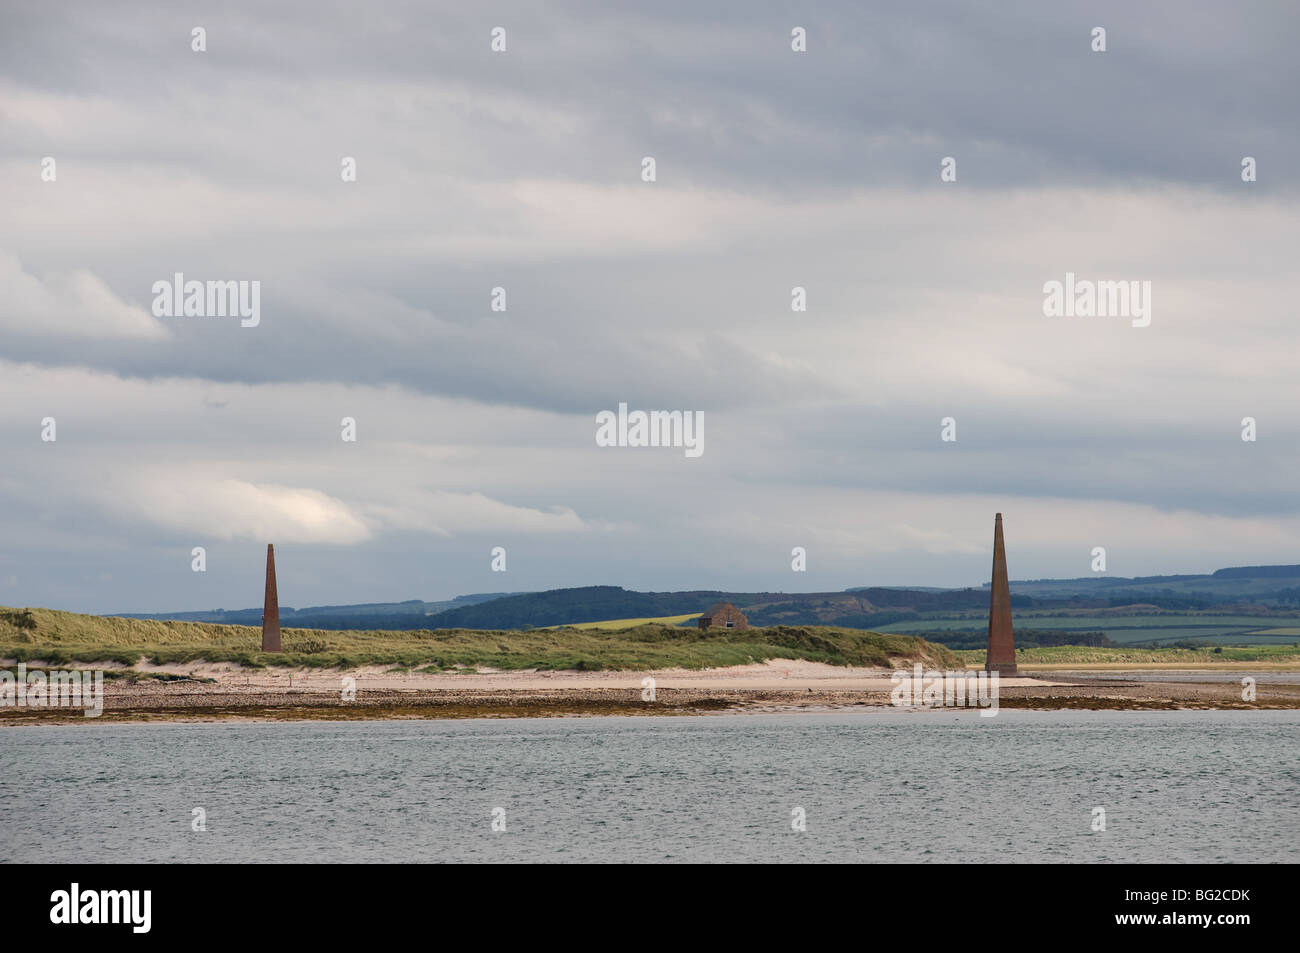 Balises de navigation maritime, Lindisfarne, Northumberland, Angleterre. Banque D'Images